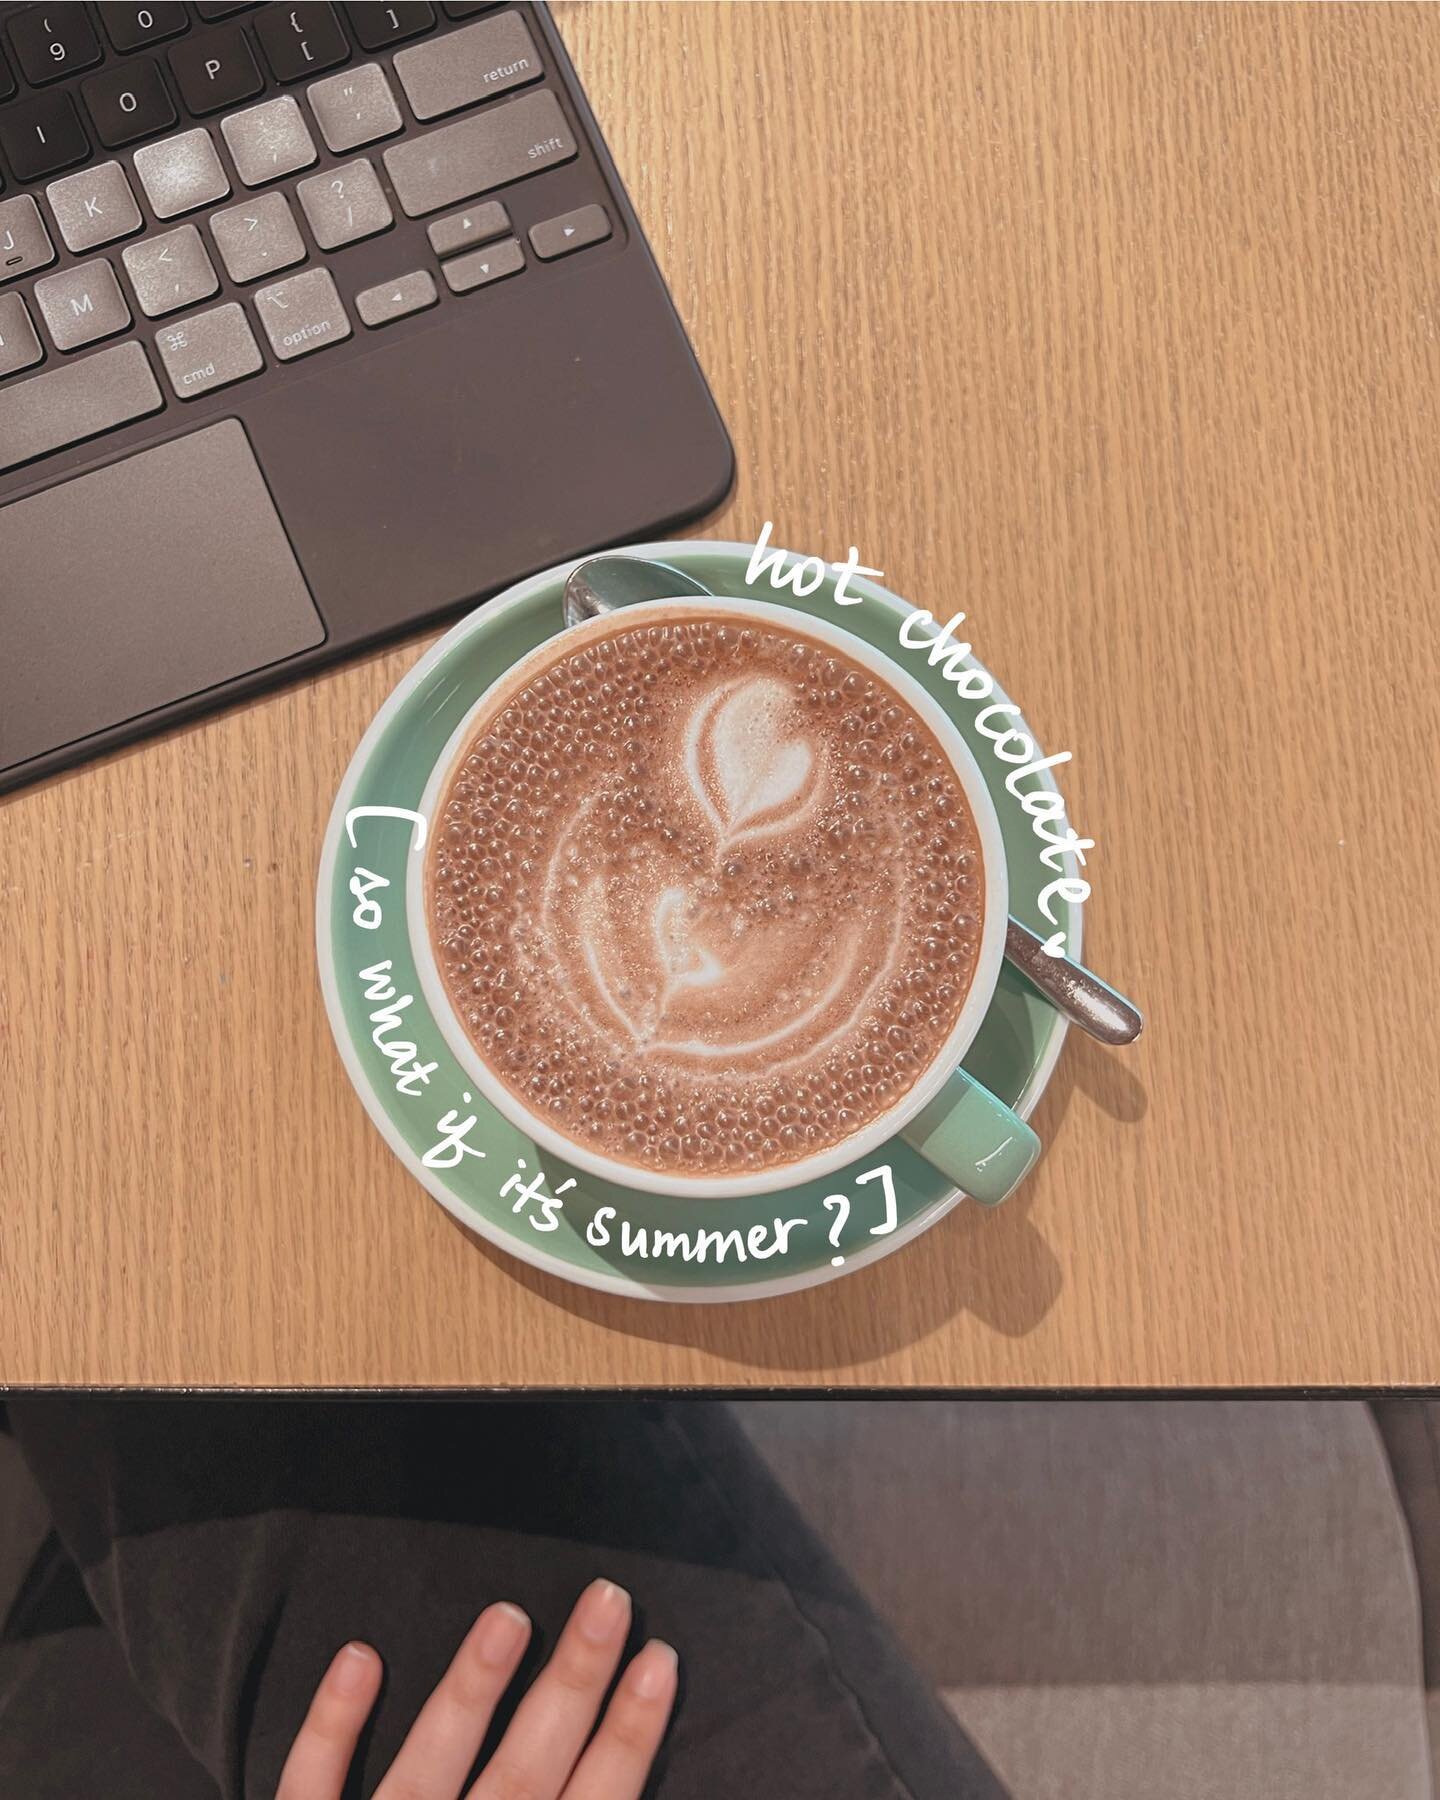 &lsquo;Who drinks hot chocolate in summer?&rsquo;
🙋🏻&zwj;♀️

 #writersofinstagram #aestheticphotos #writerscommunity #writingcommunity #lifestyleinspo #lifestyleblog #dubaibloggers #dubaiblog #indianbloggers #lifestyleblogging #selfcareblogger #lif